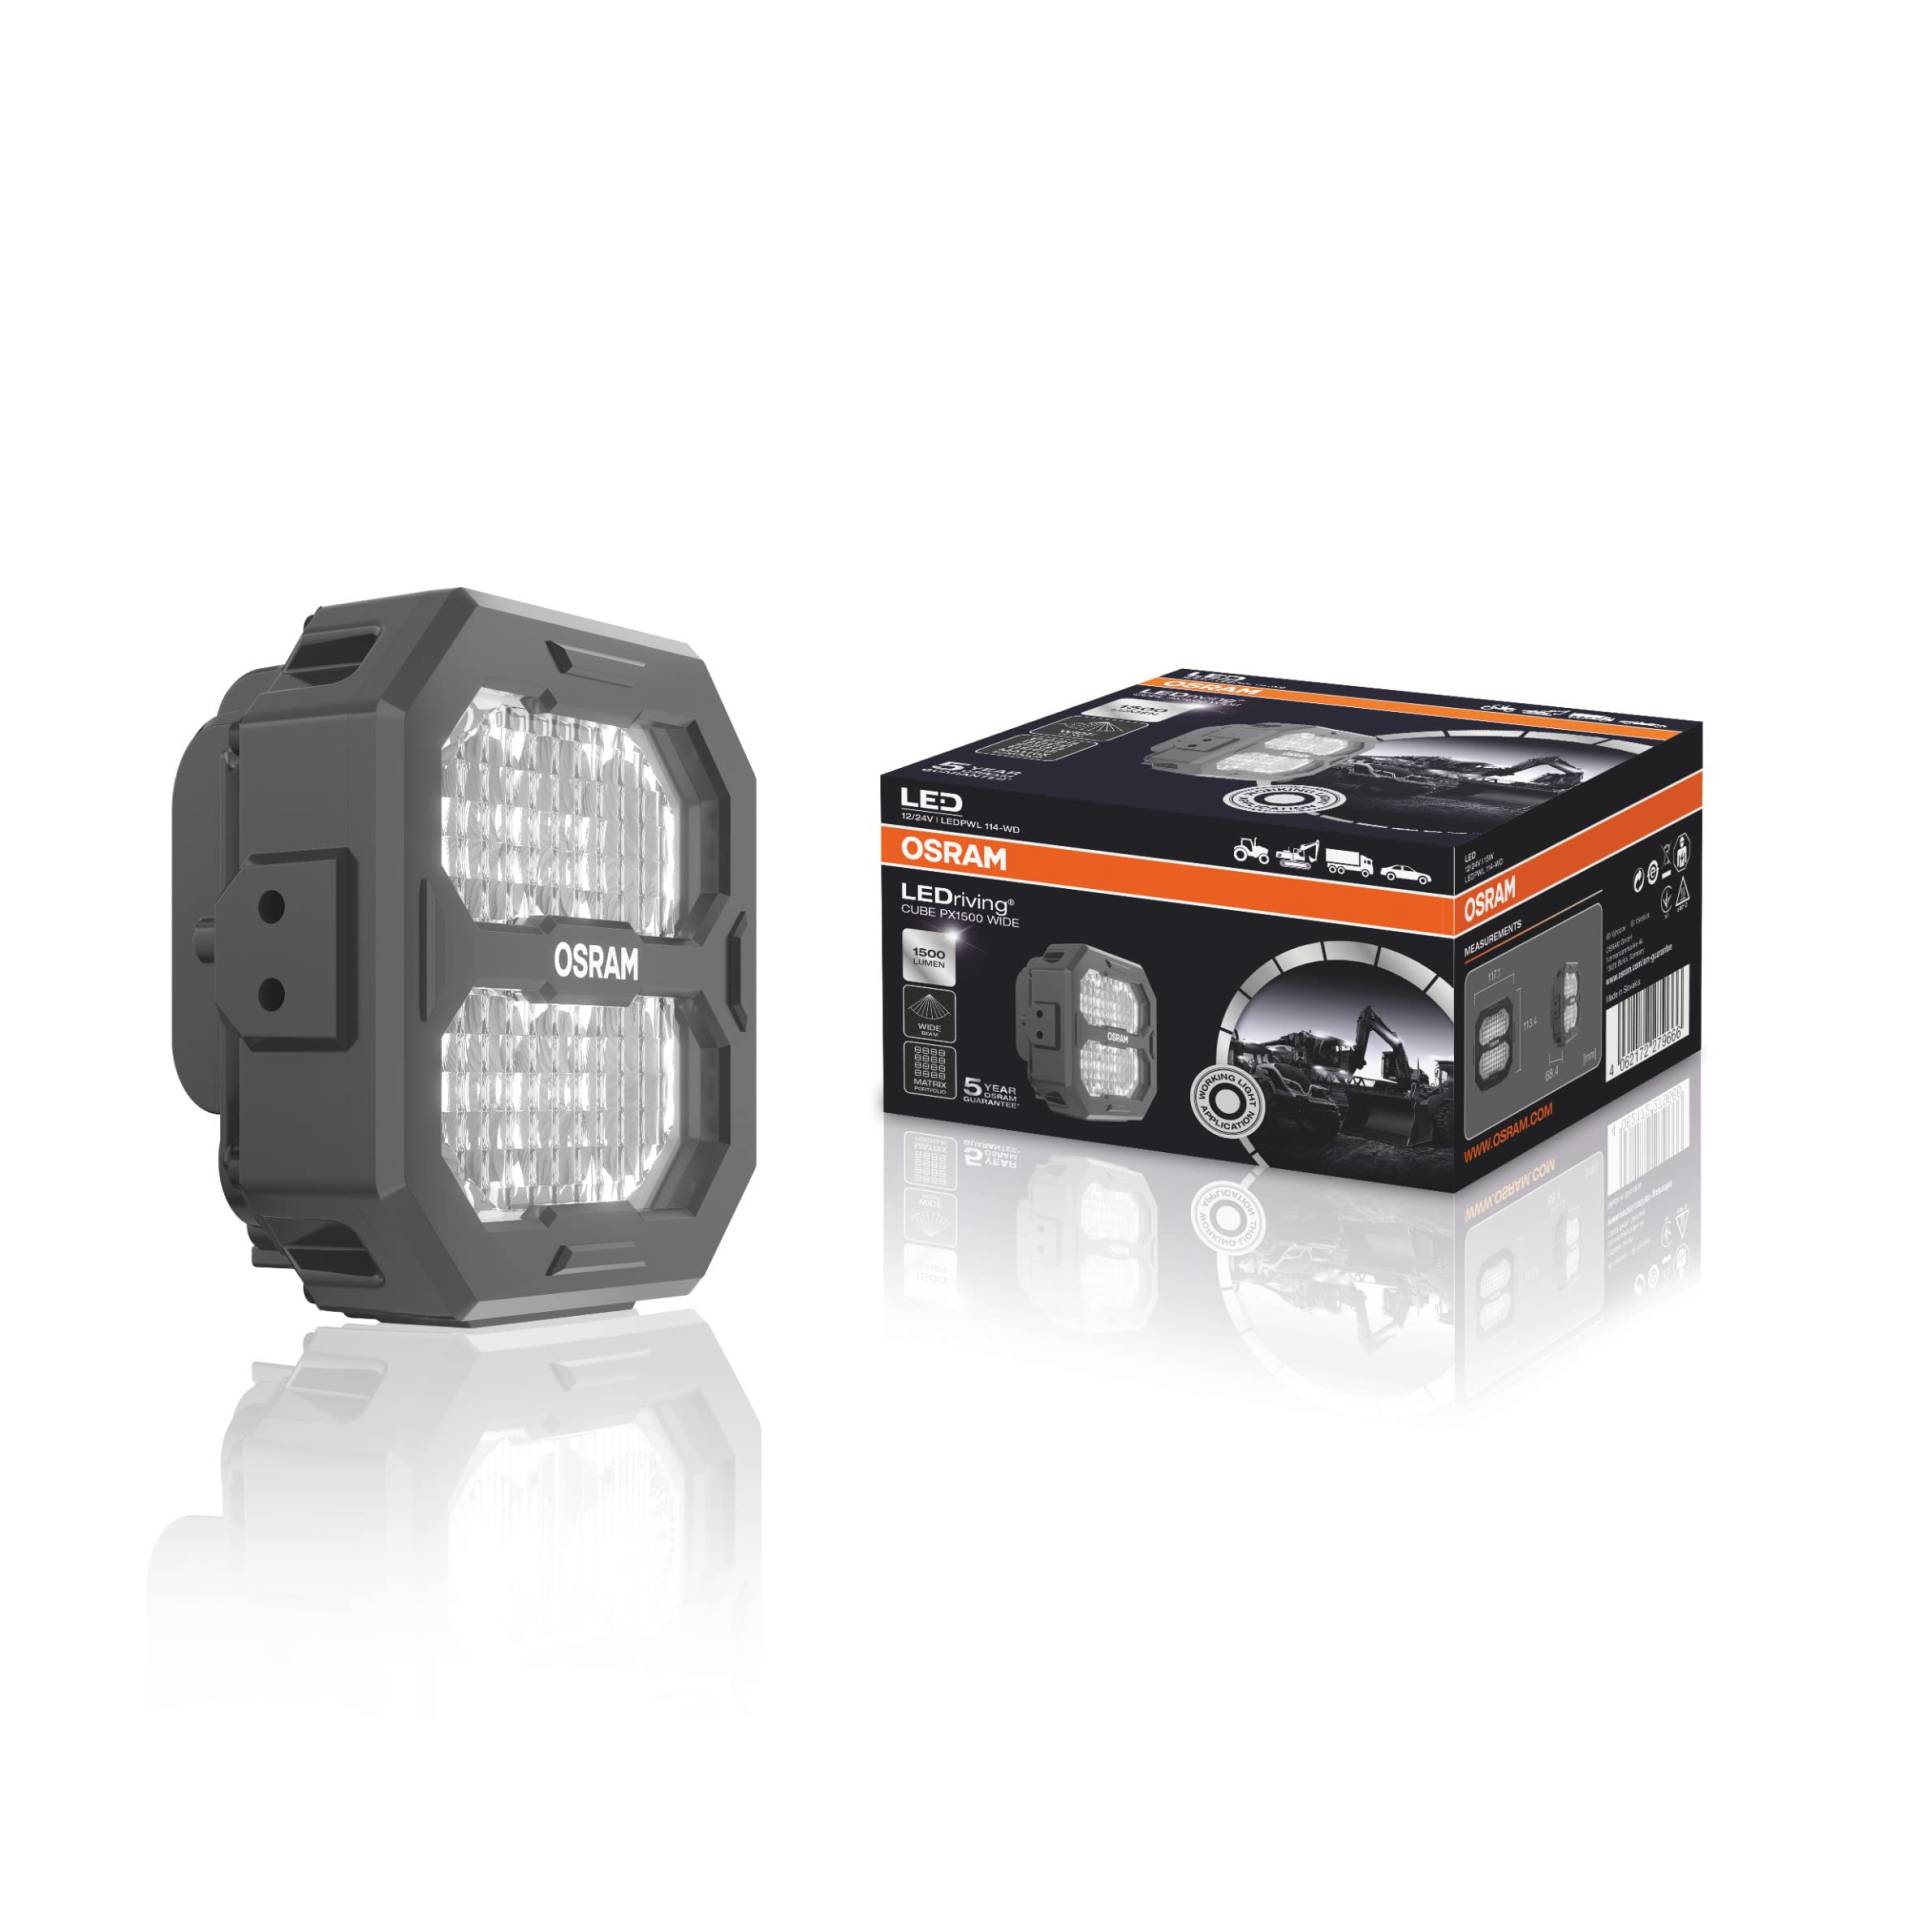 OSRAM LEDriving® Cube PX1500 Wide, LEDPWL114-WD, OFF ROAD, LED Arbeitsscheinwerfer, 1500 Lumen, Faltschachtel (1 Lampe) von Osram